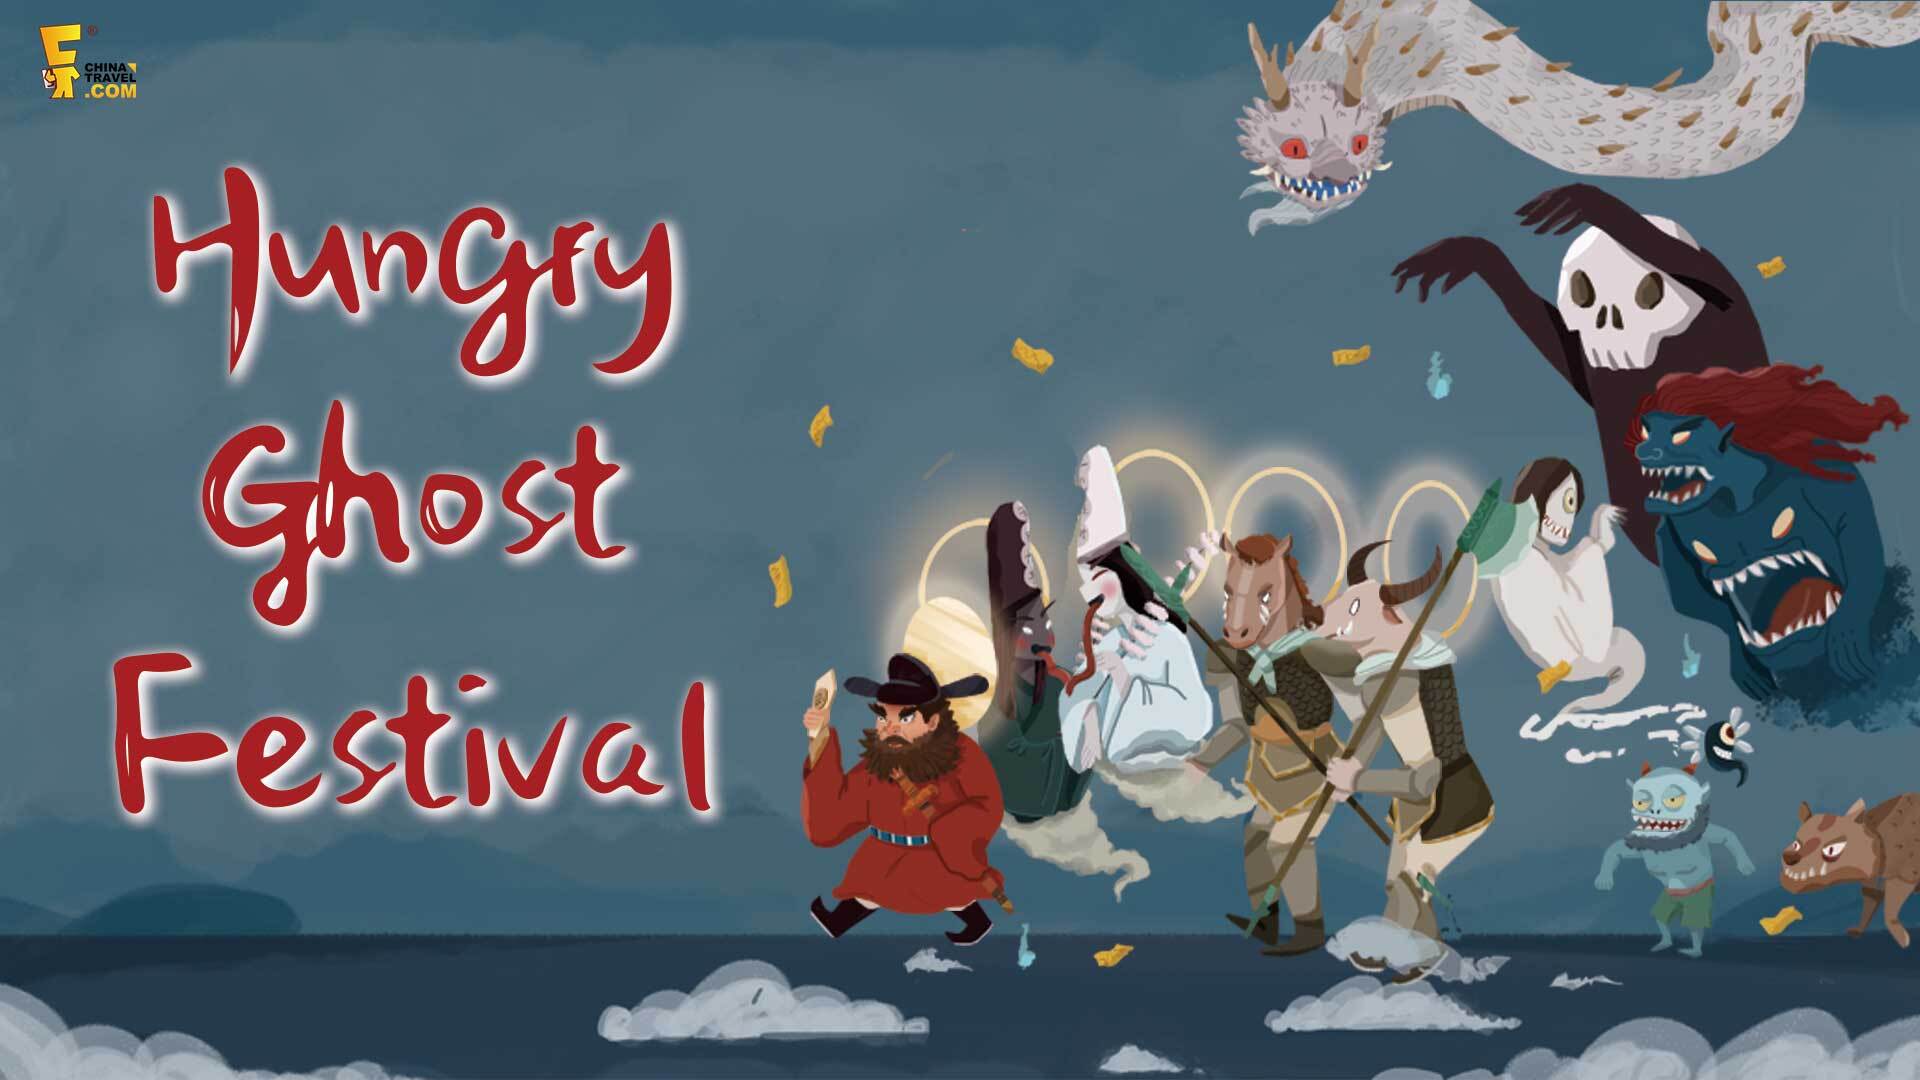 Cartoon Hungry Ghost Festival Mug Image by Shutterstock セール品